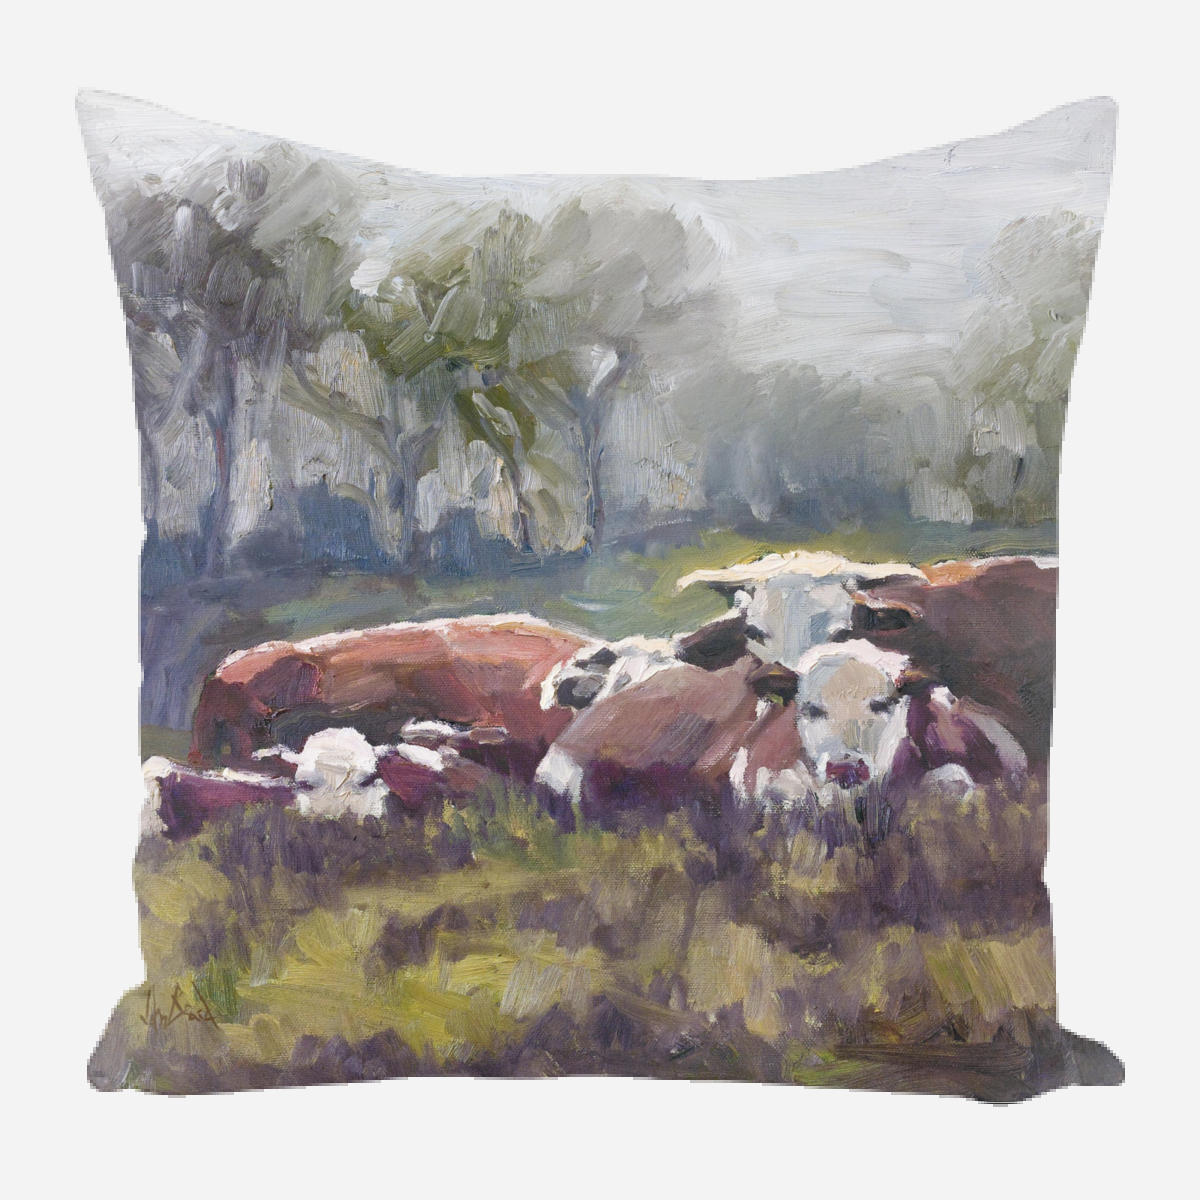 Five Cows Pillow